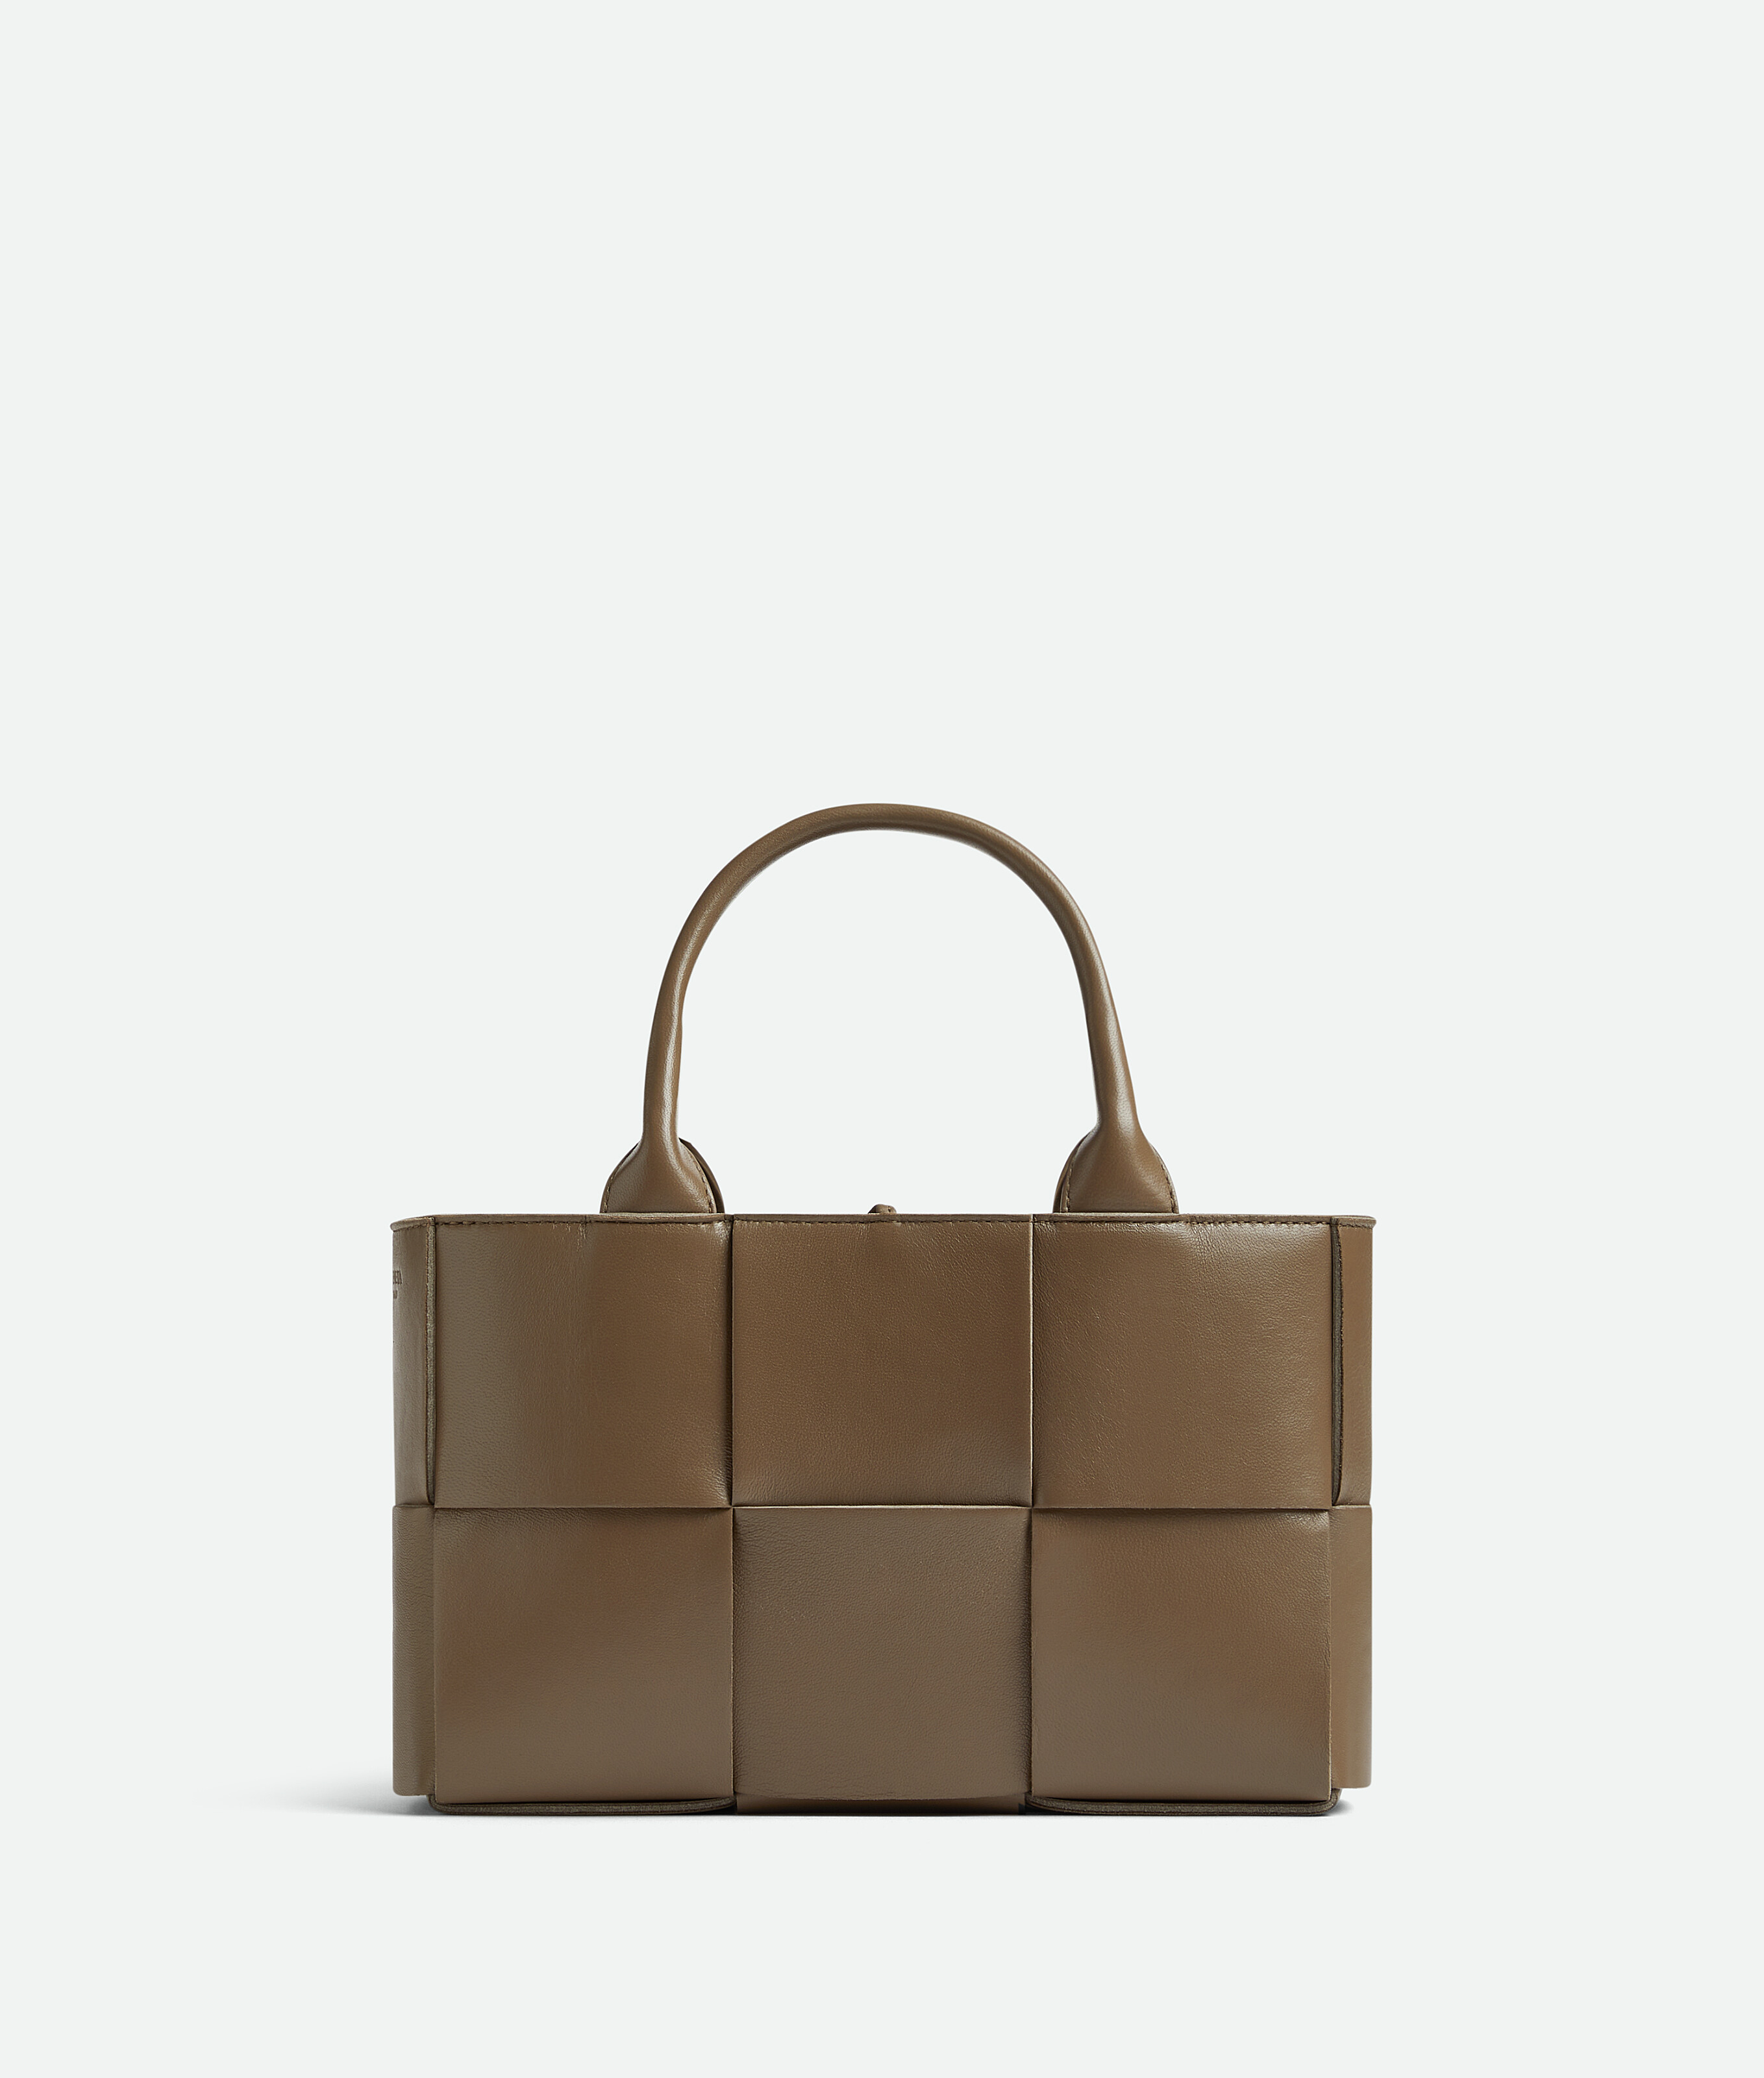 Bottega Veneta Mini Loop Bag in Agate Grey & Muse Brass, Grey. Size all.